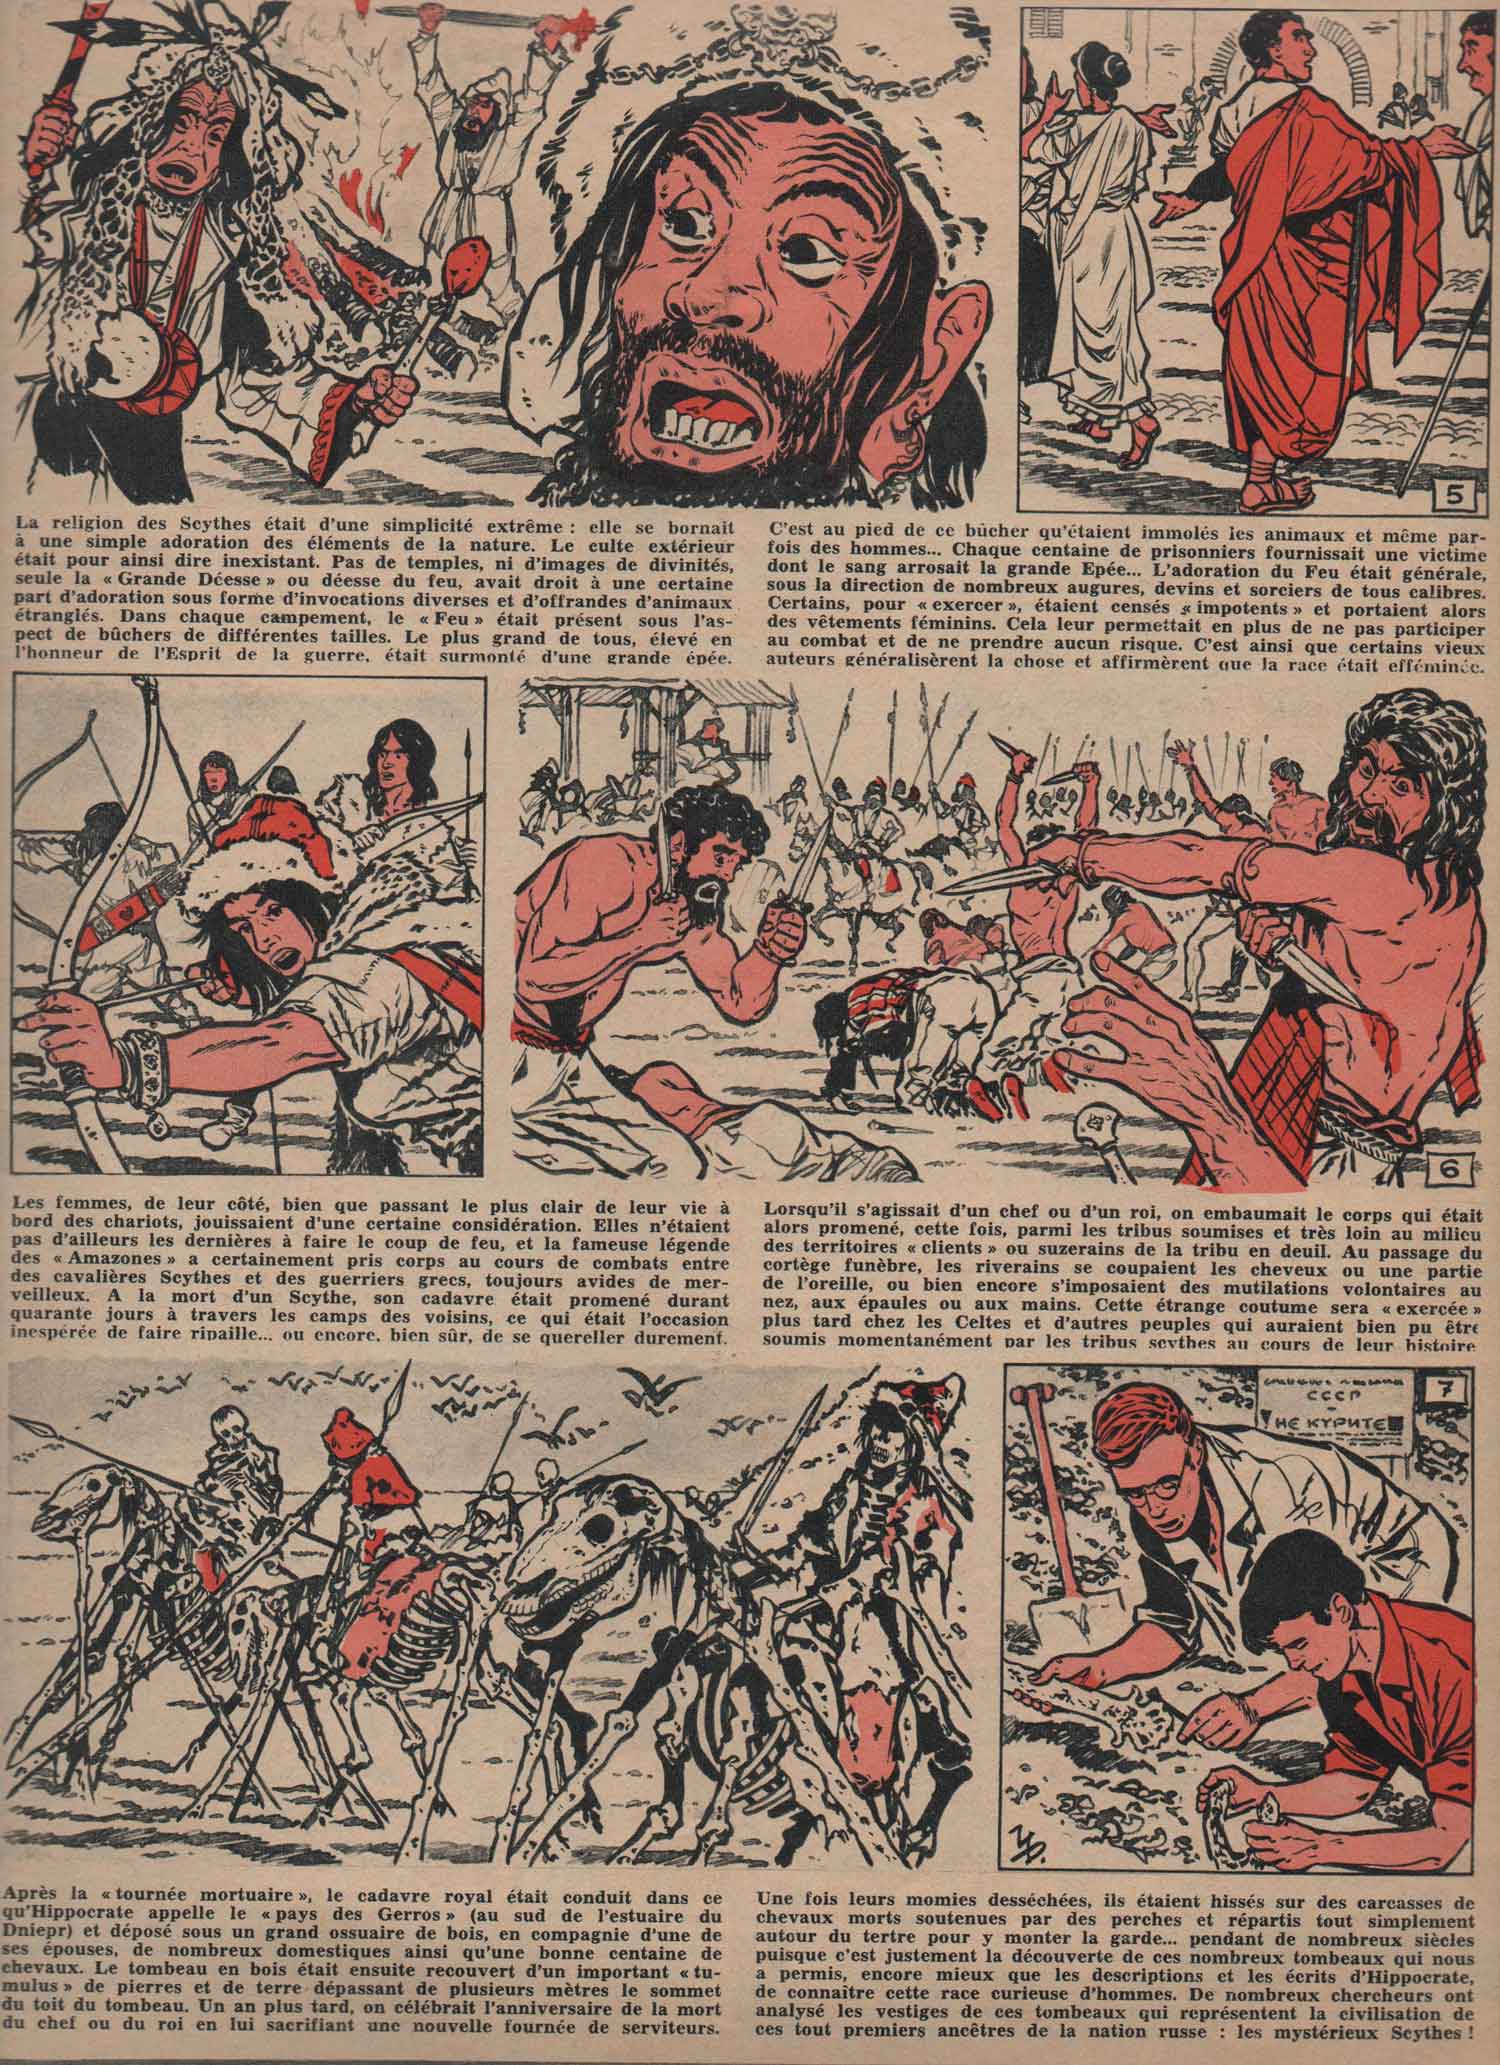 « Les Scythes » dans Pilote n° 361 (22/09/1966).